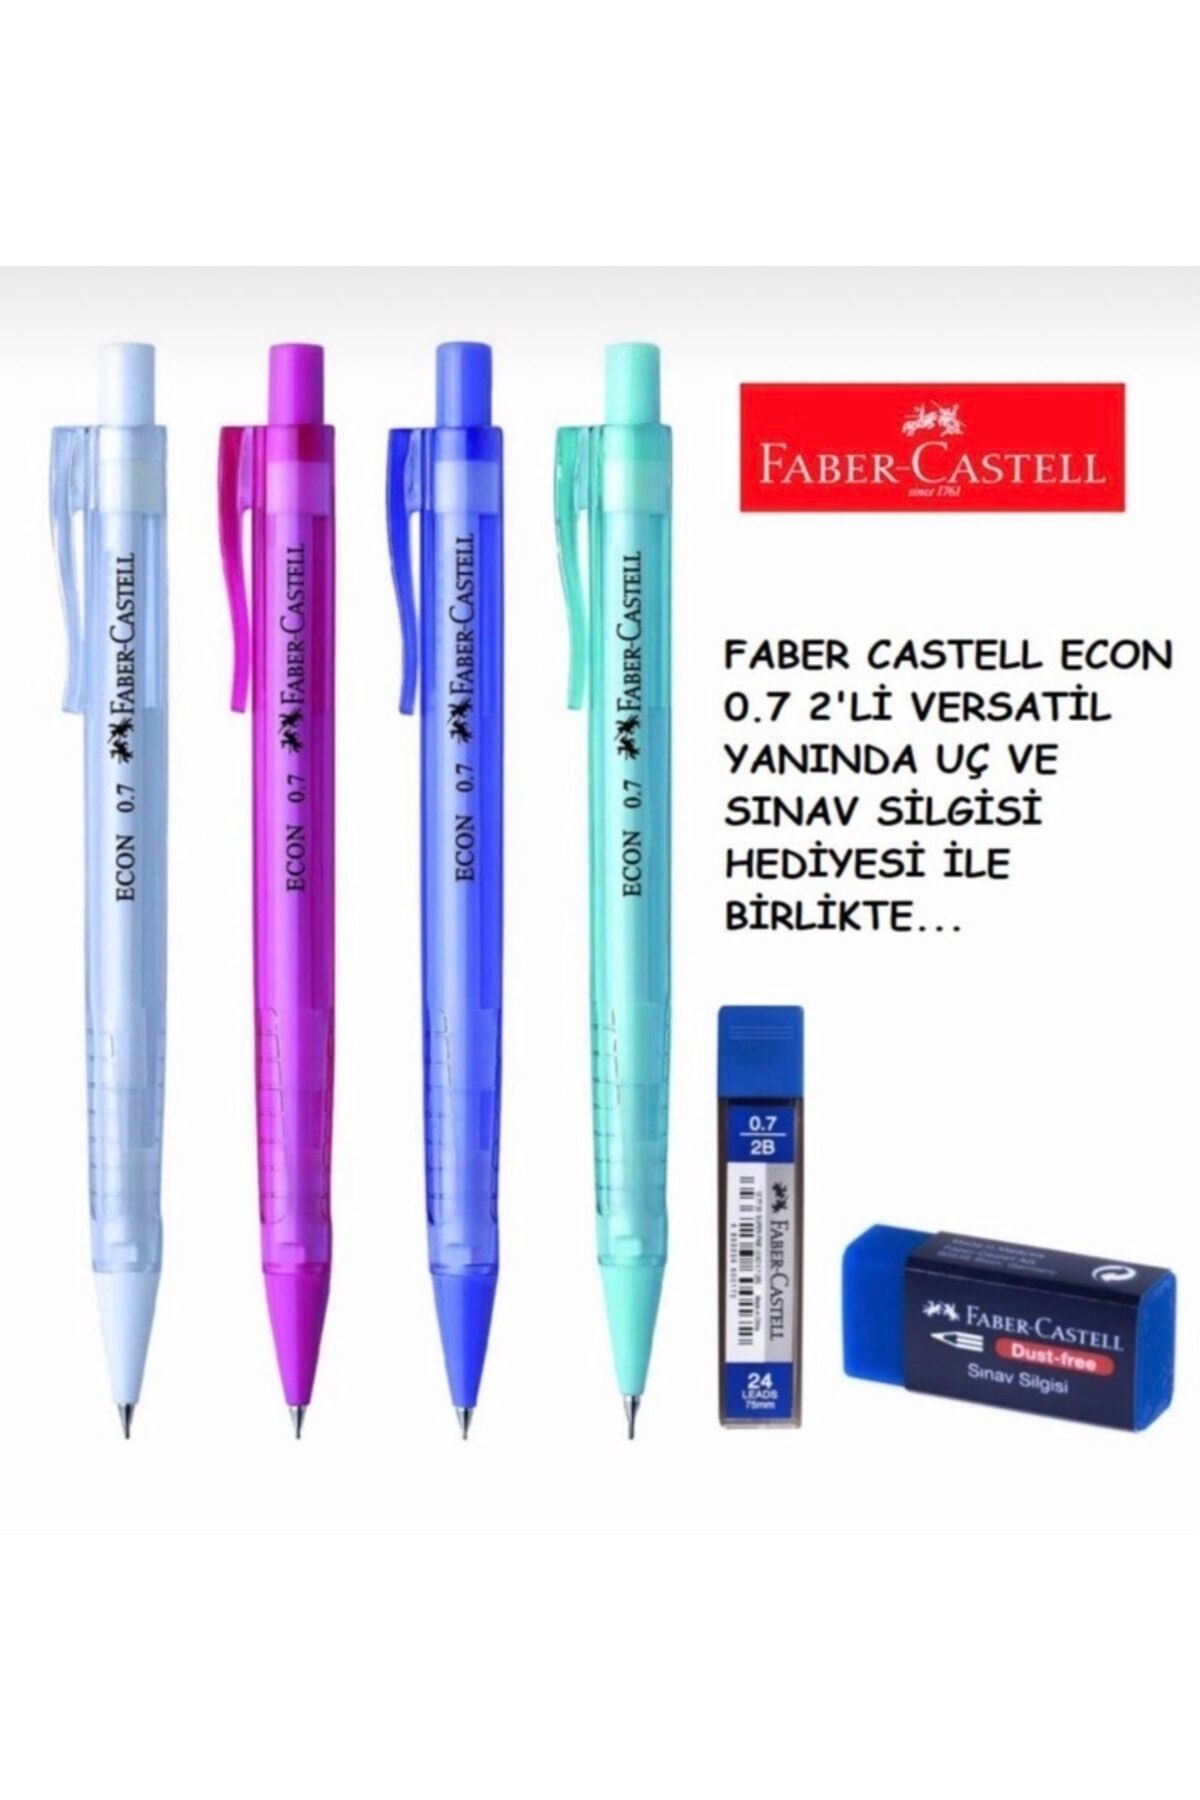 Faber Castell Econ 0,7mm Versatil + F.c 0,7mm 2b 24’lü Uç + F.c Sınav Silgisi